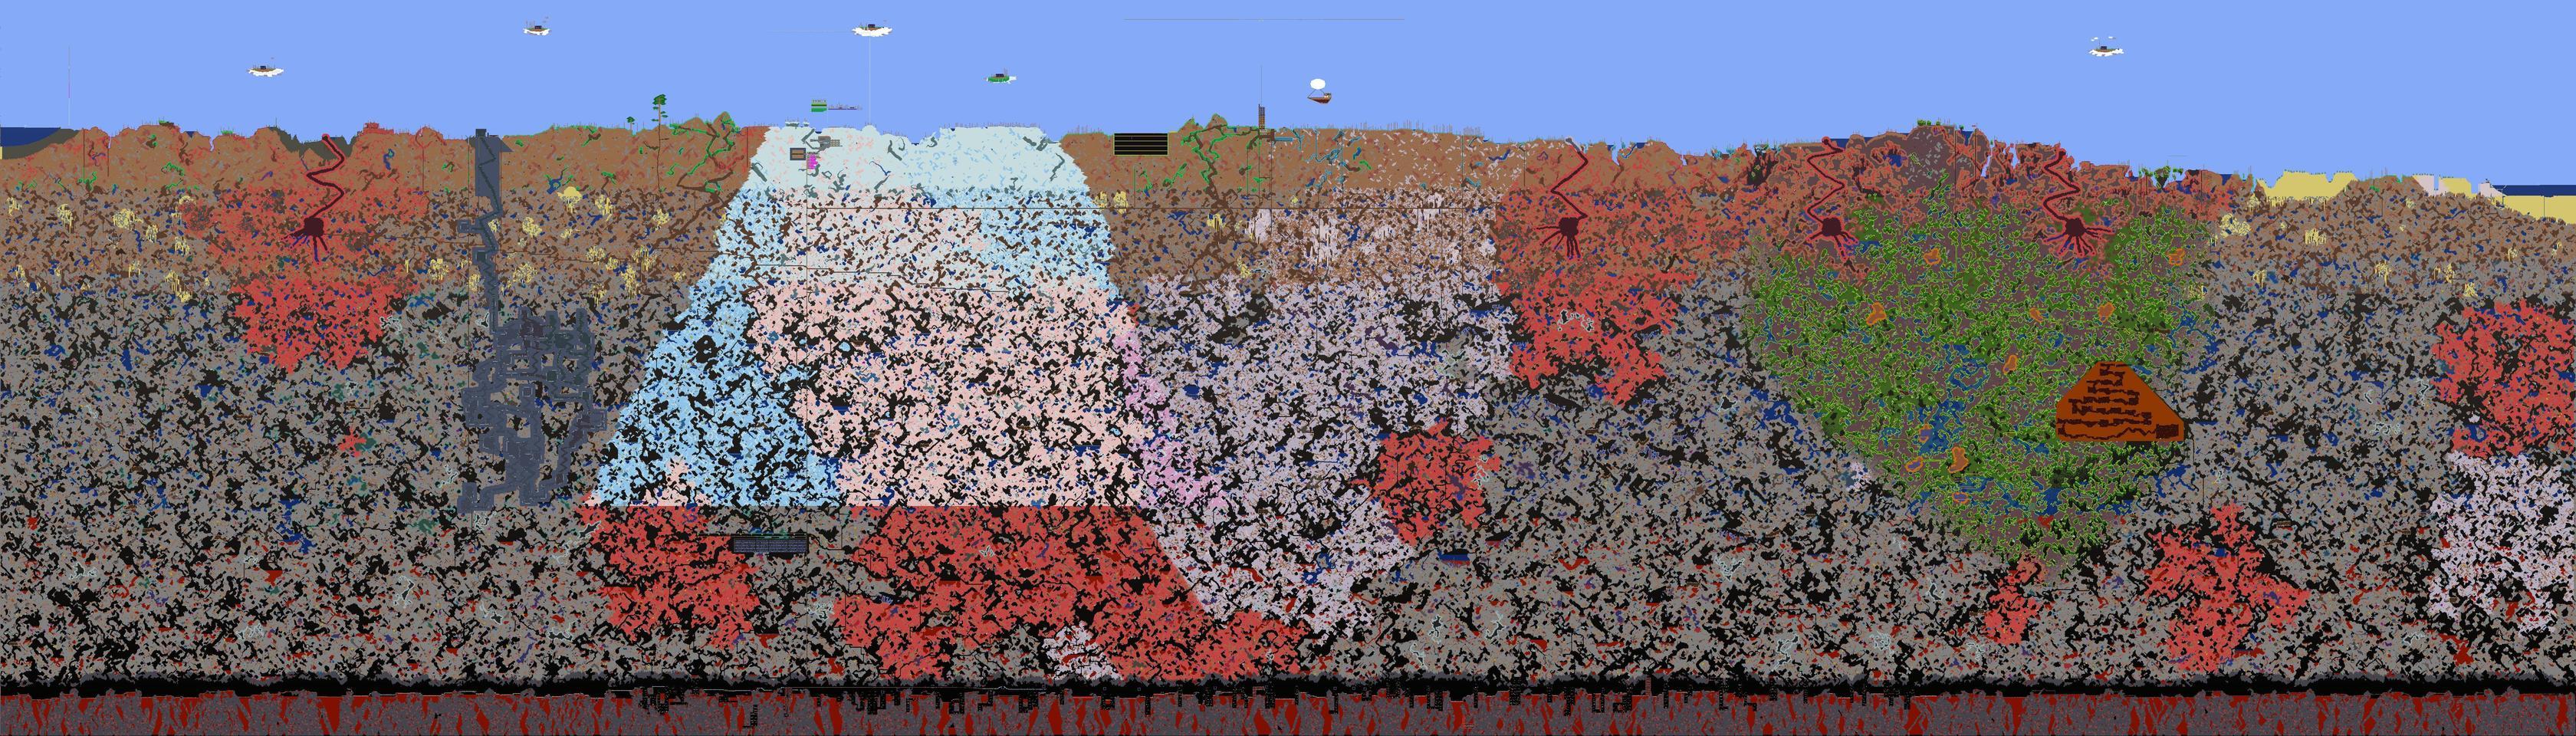 Shimmer biome terraria фото 70